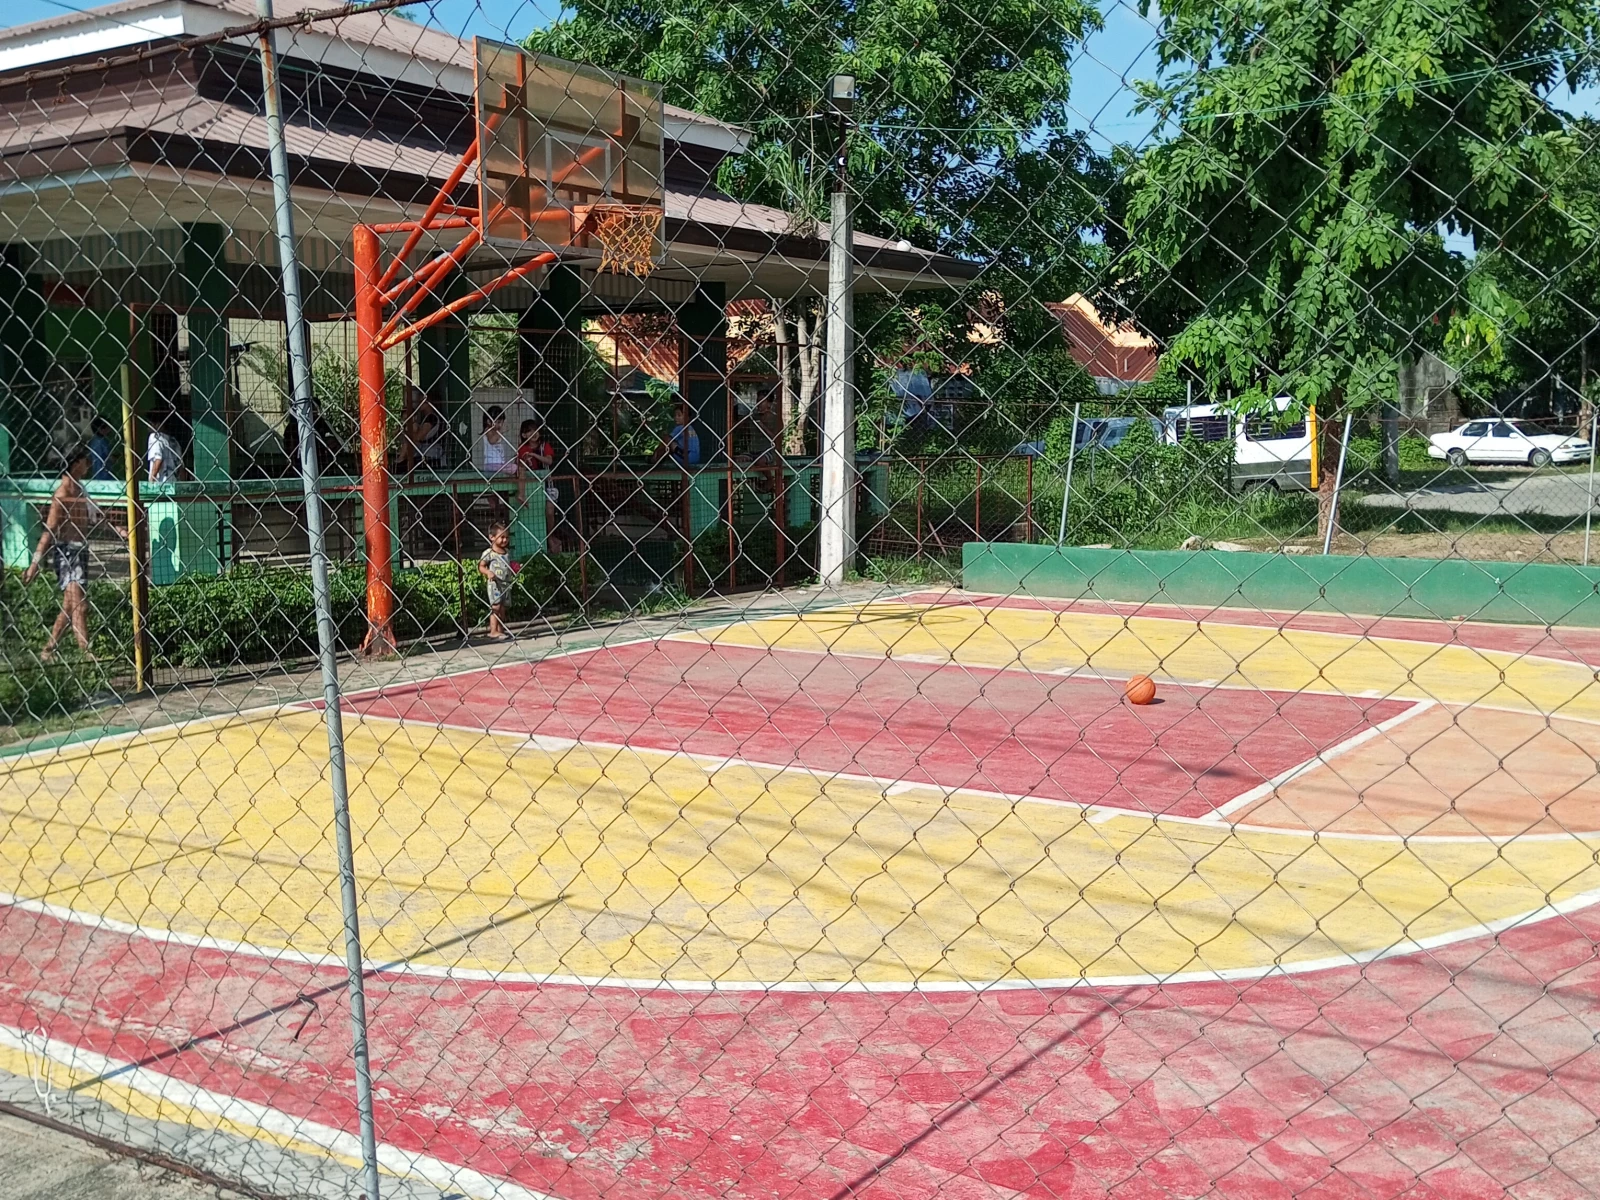 San Pedro Basketball Court: SJV9 PH2 Basketball Court Courts of the World